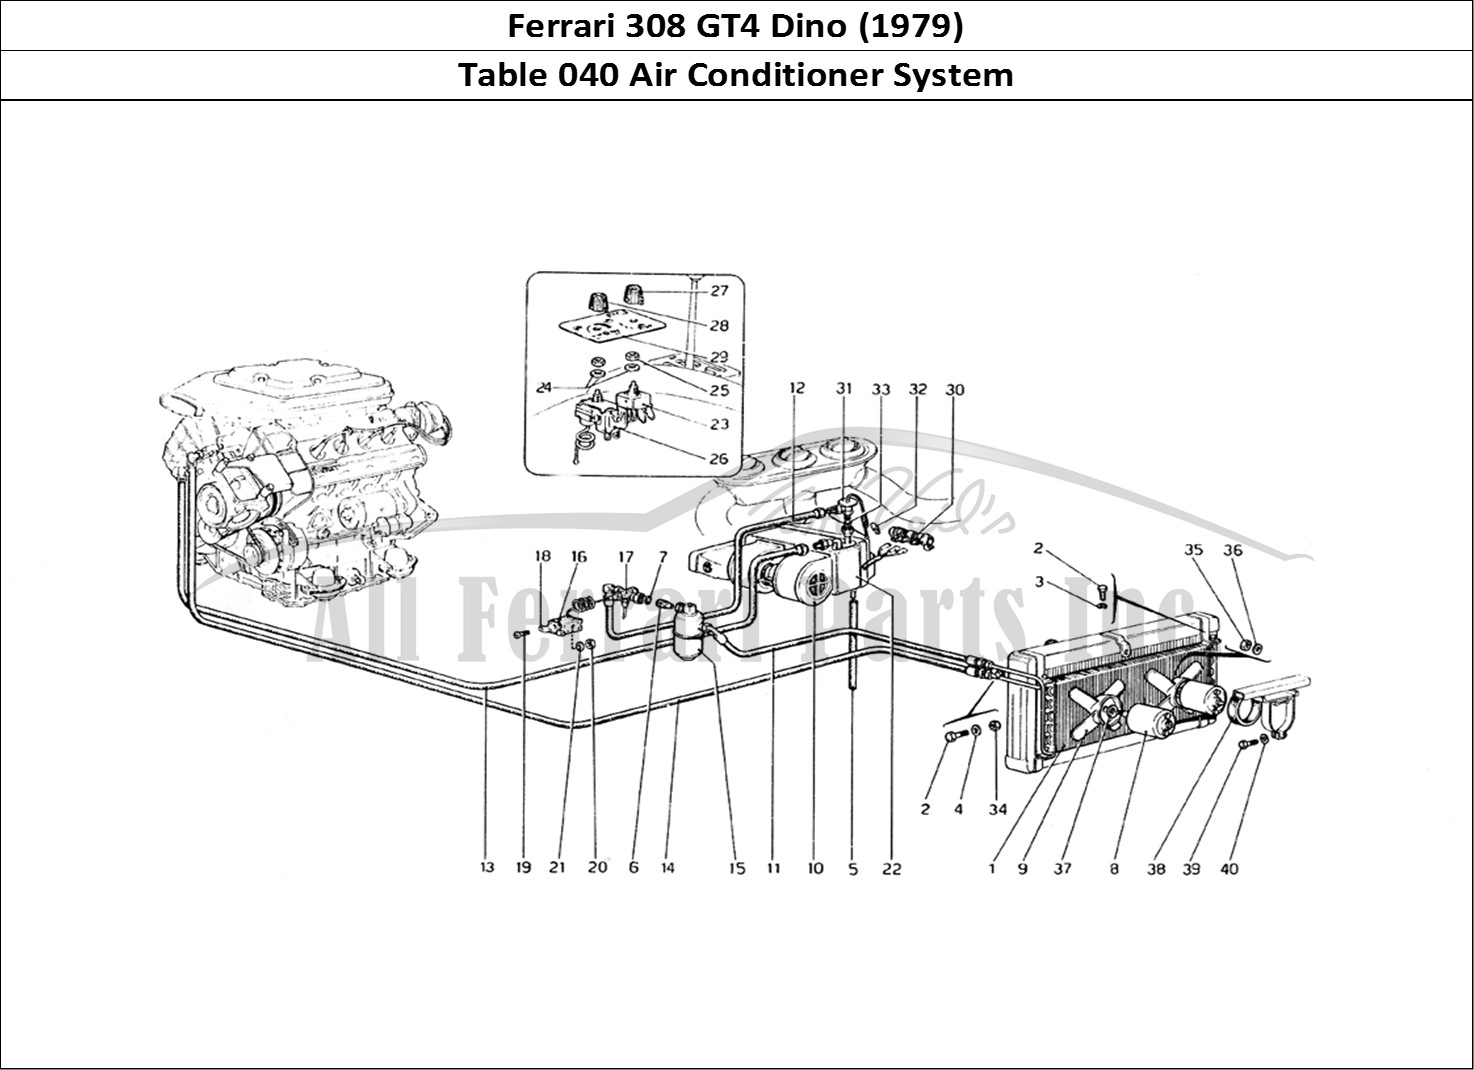 Ferrari Parts Ferrari 308 GT4 Dino (1979) Page 040 Air Conditioning System